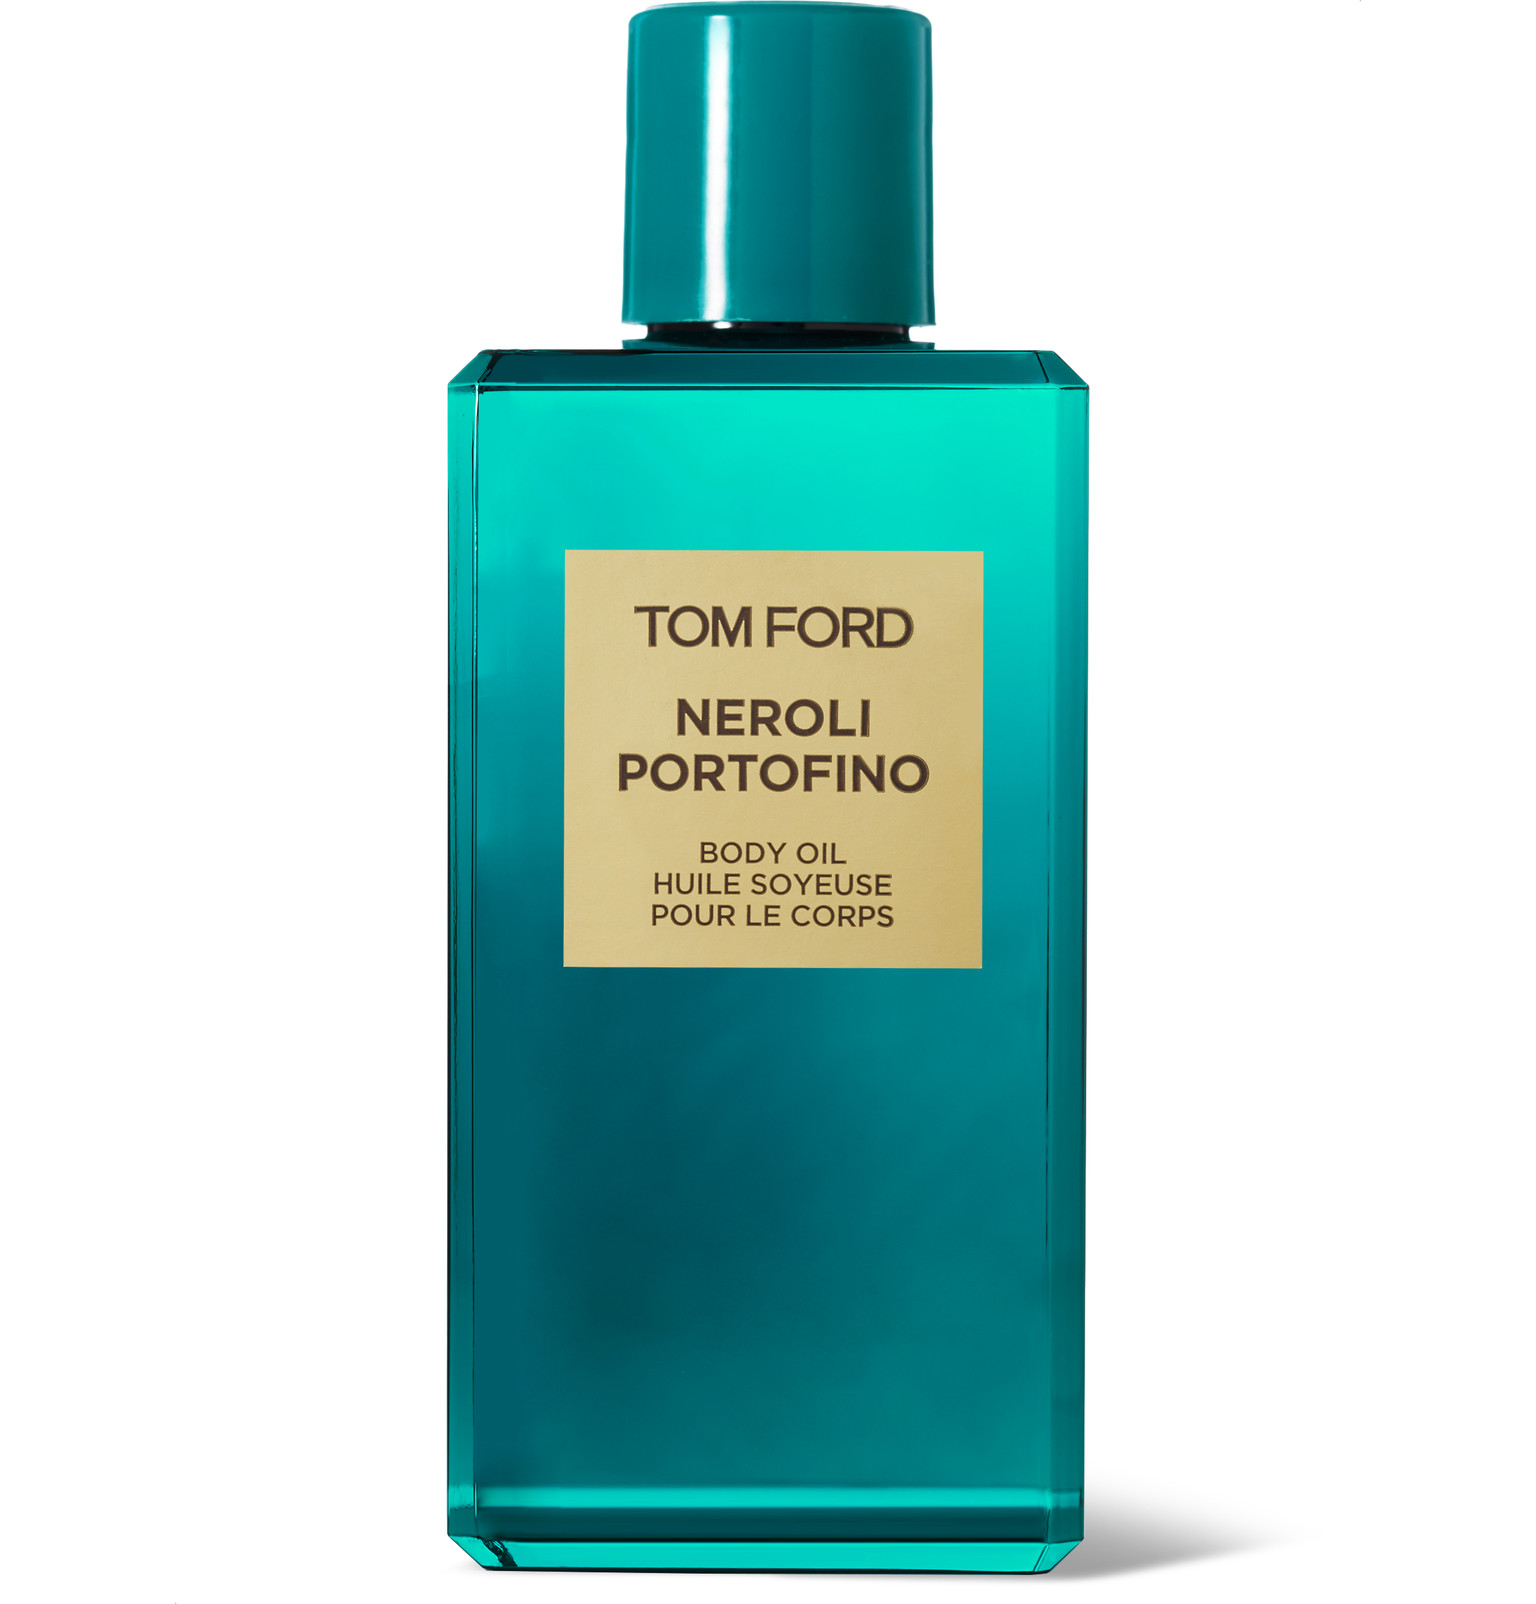 TOM FORD BEAUTY - Neroli Portofino Body Oil, 250ml - Men - Blue | The ...